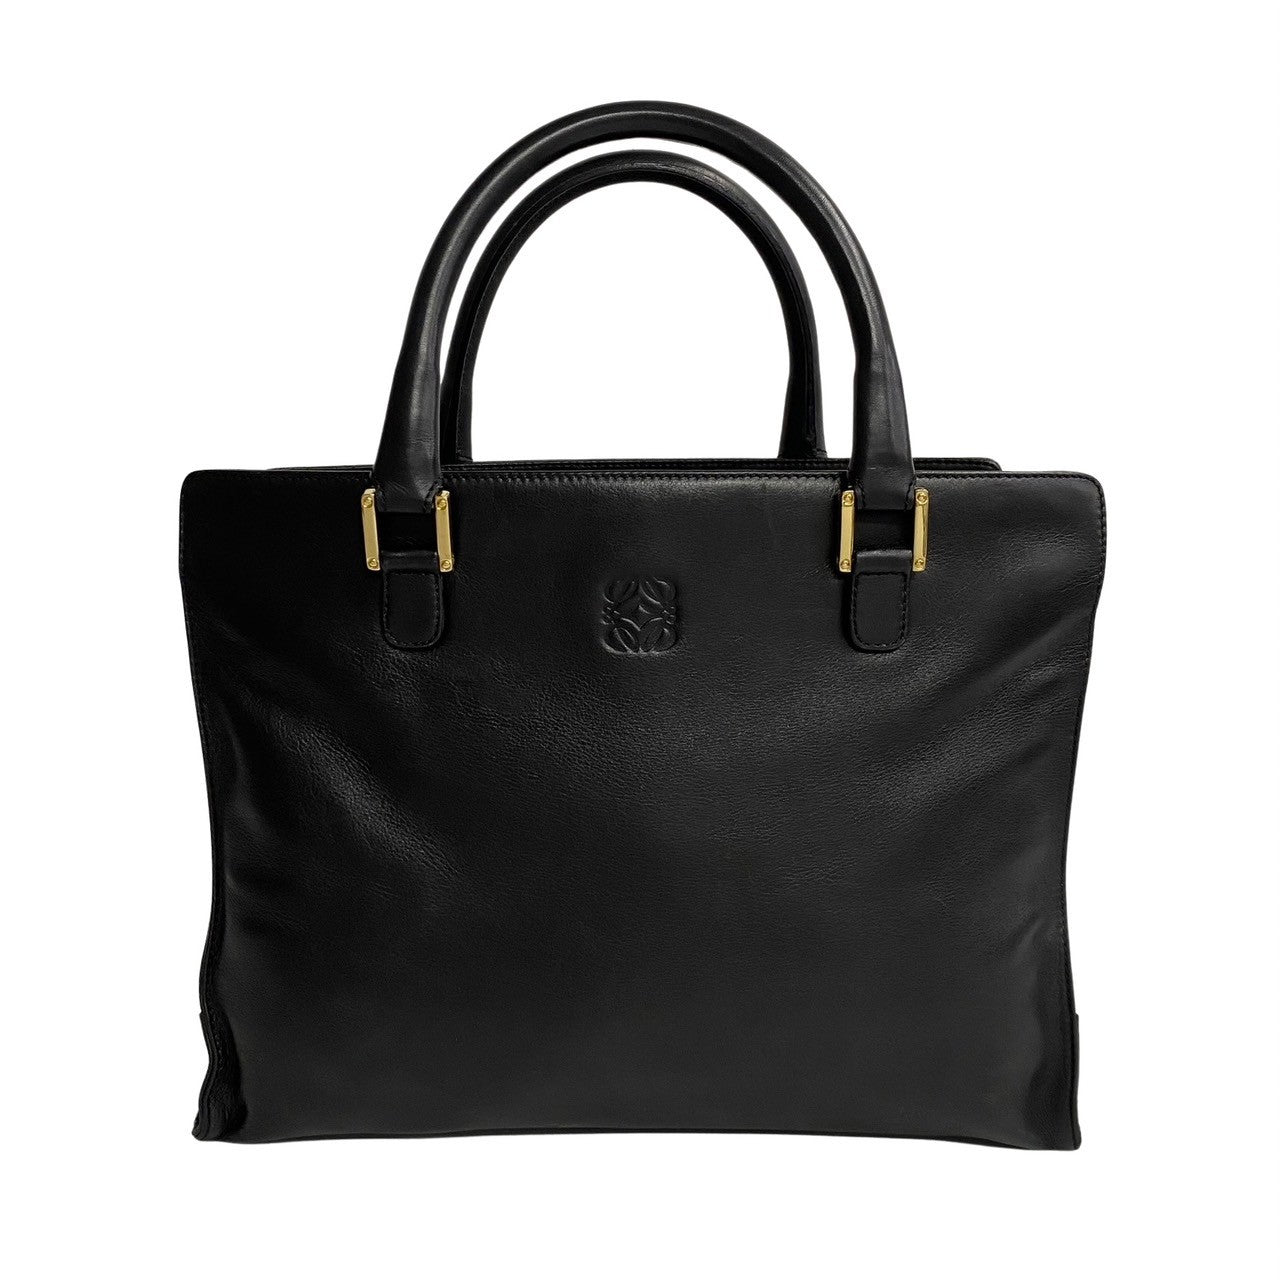 Leather Anagram Handbag